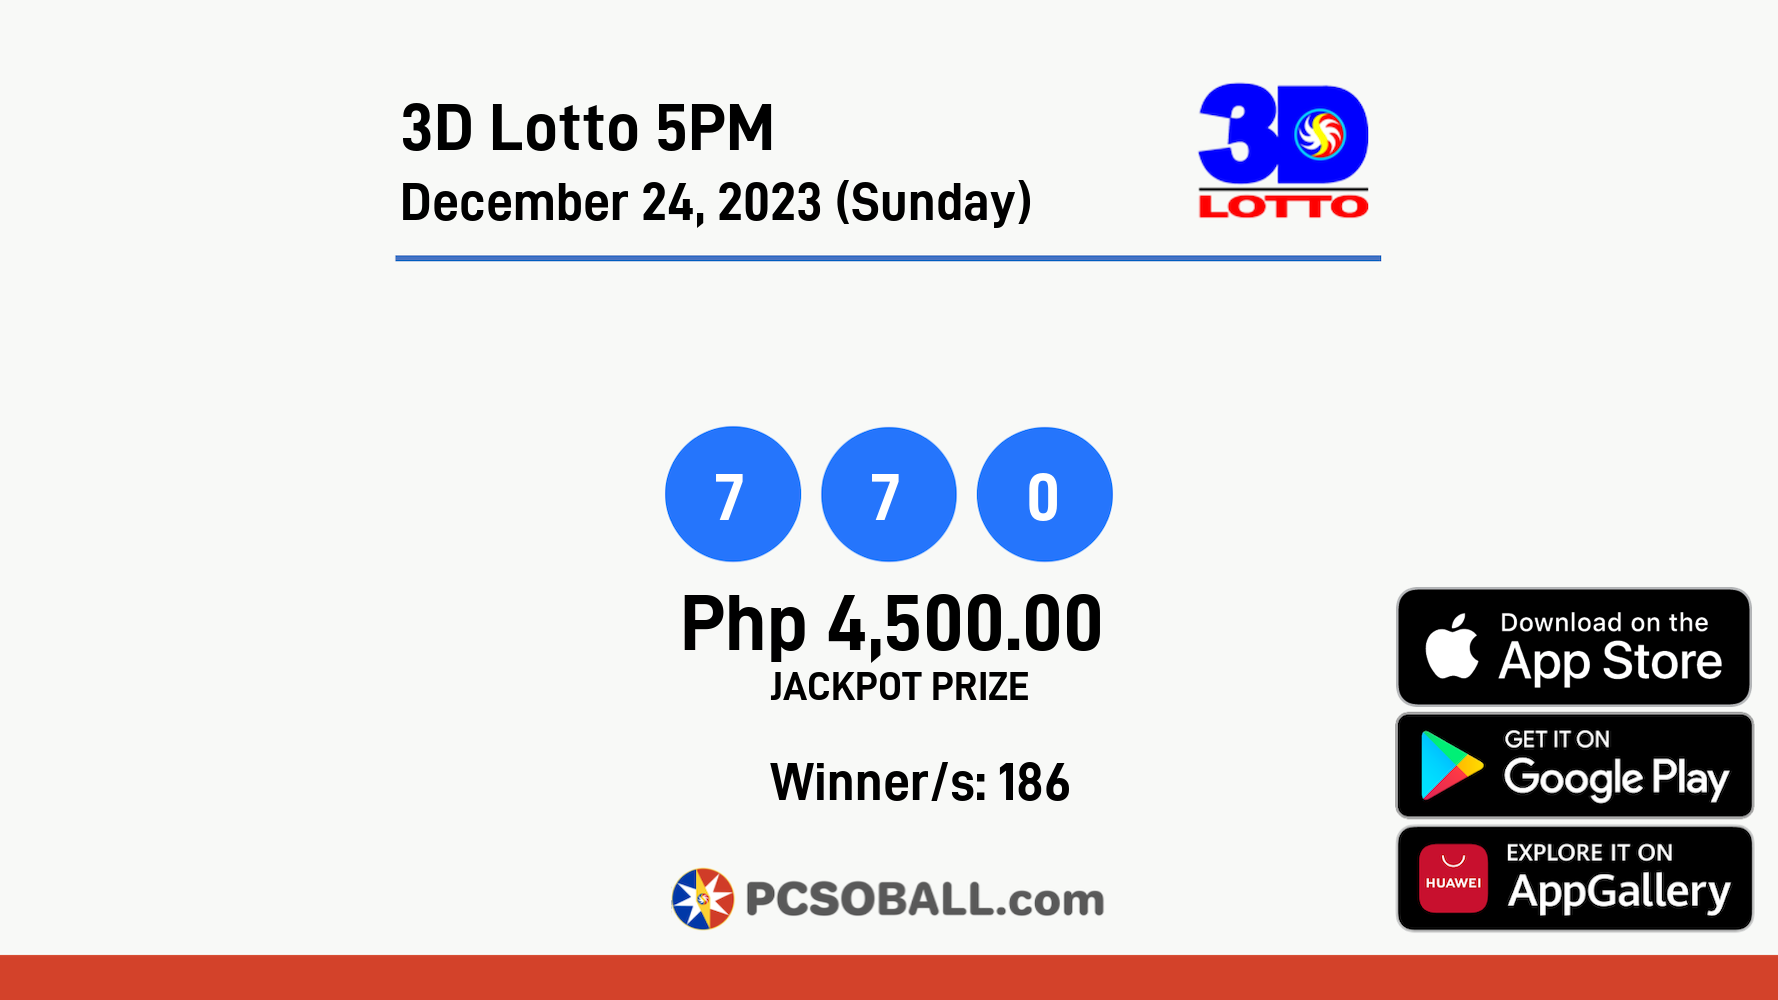 3D Lotto 5PM December 24, 2023 (Sunday) Result